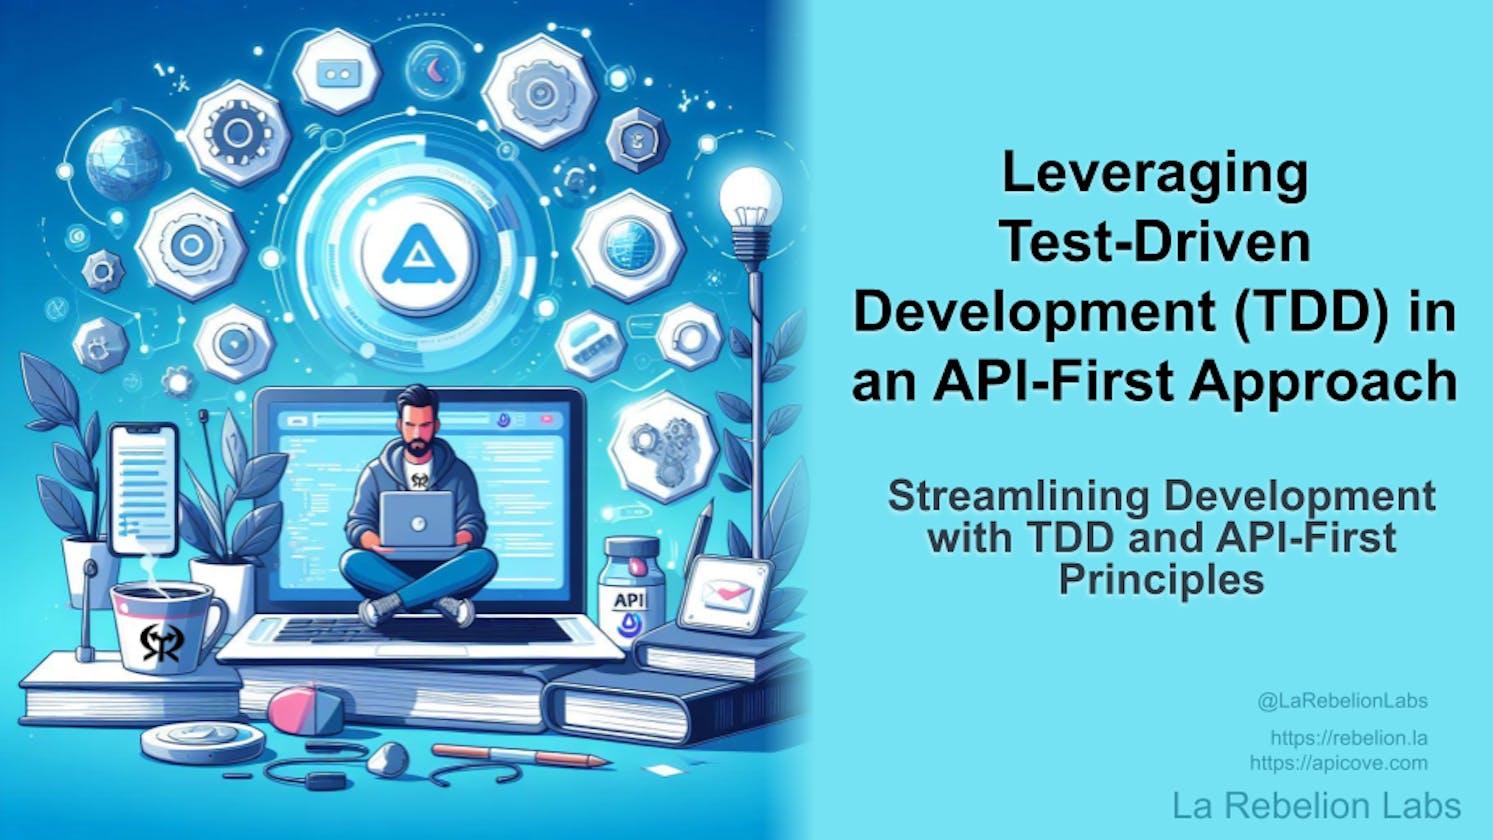 Leveraging Test-Driven Development (TDD) in an API-First Approach